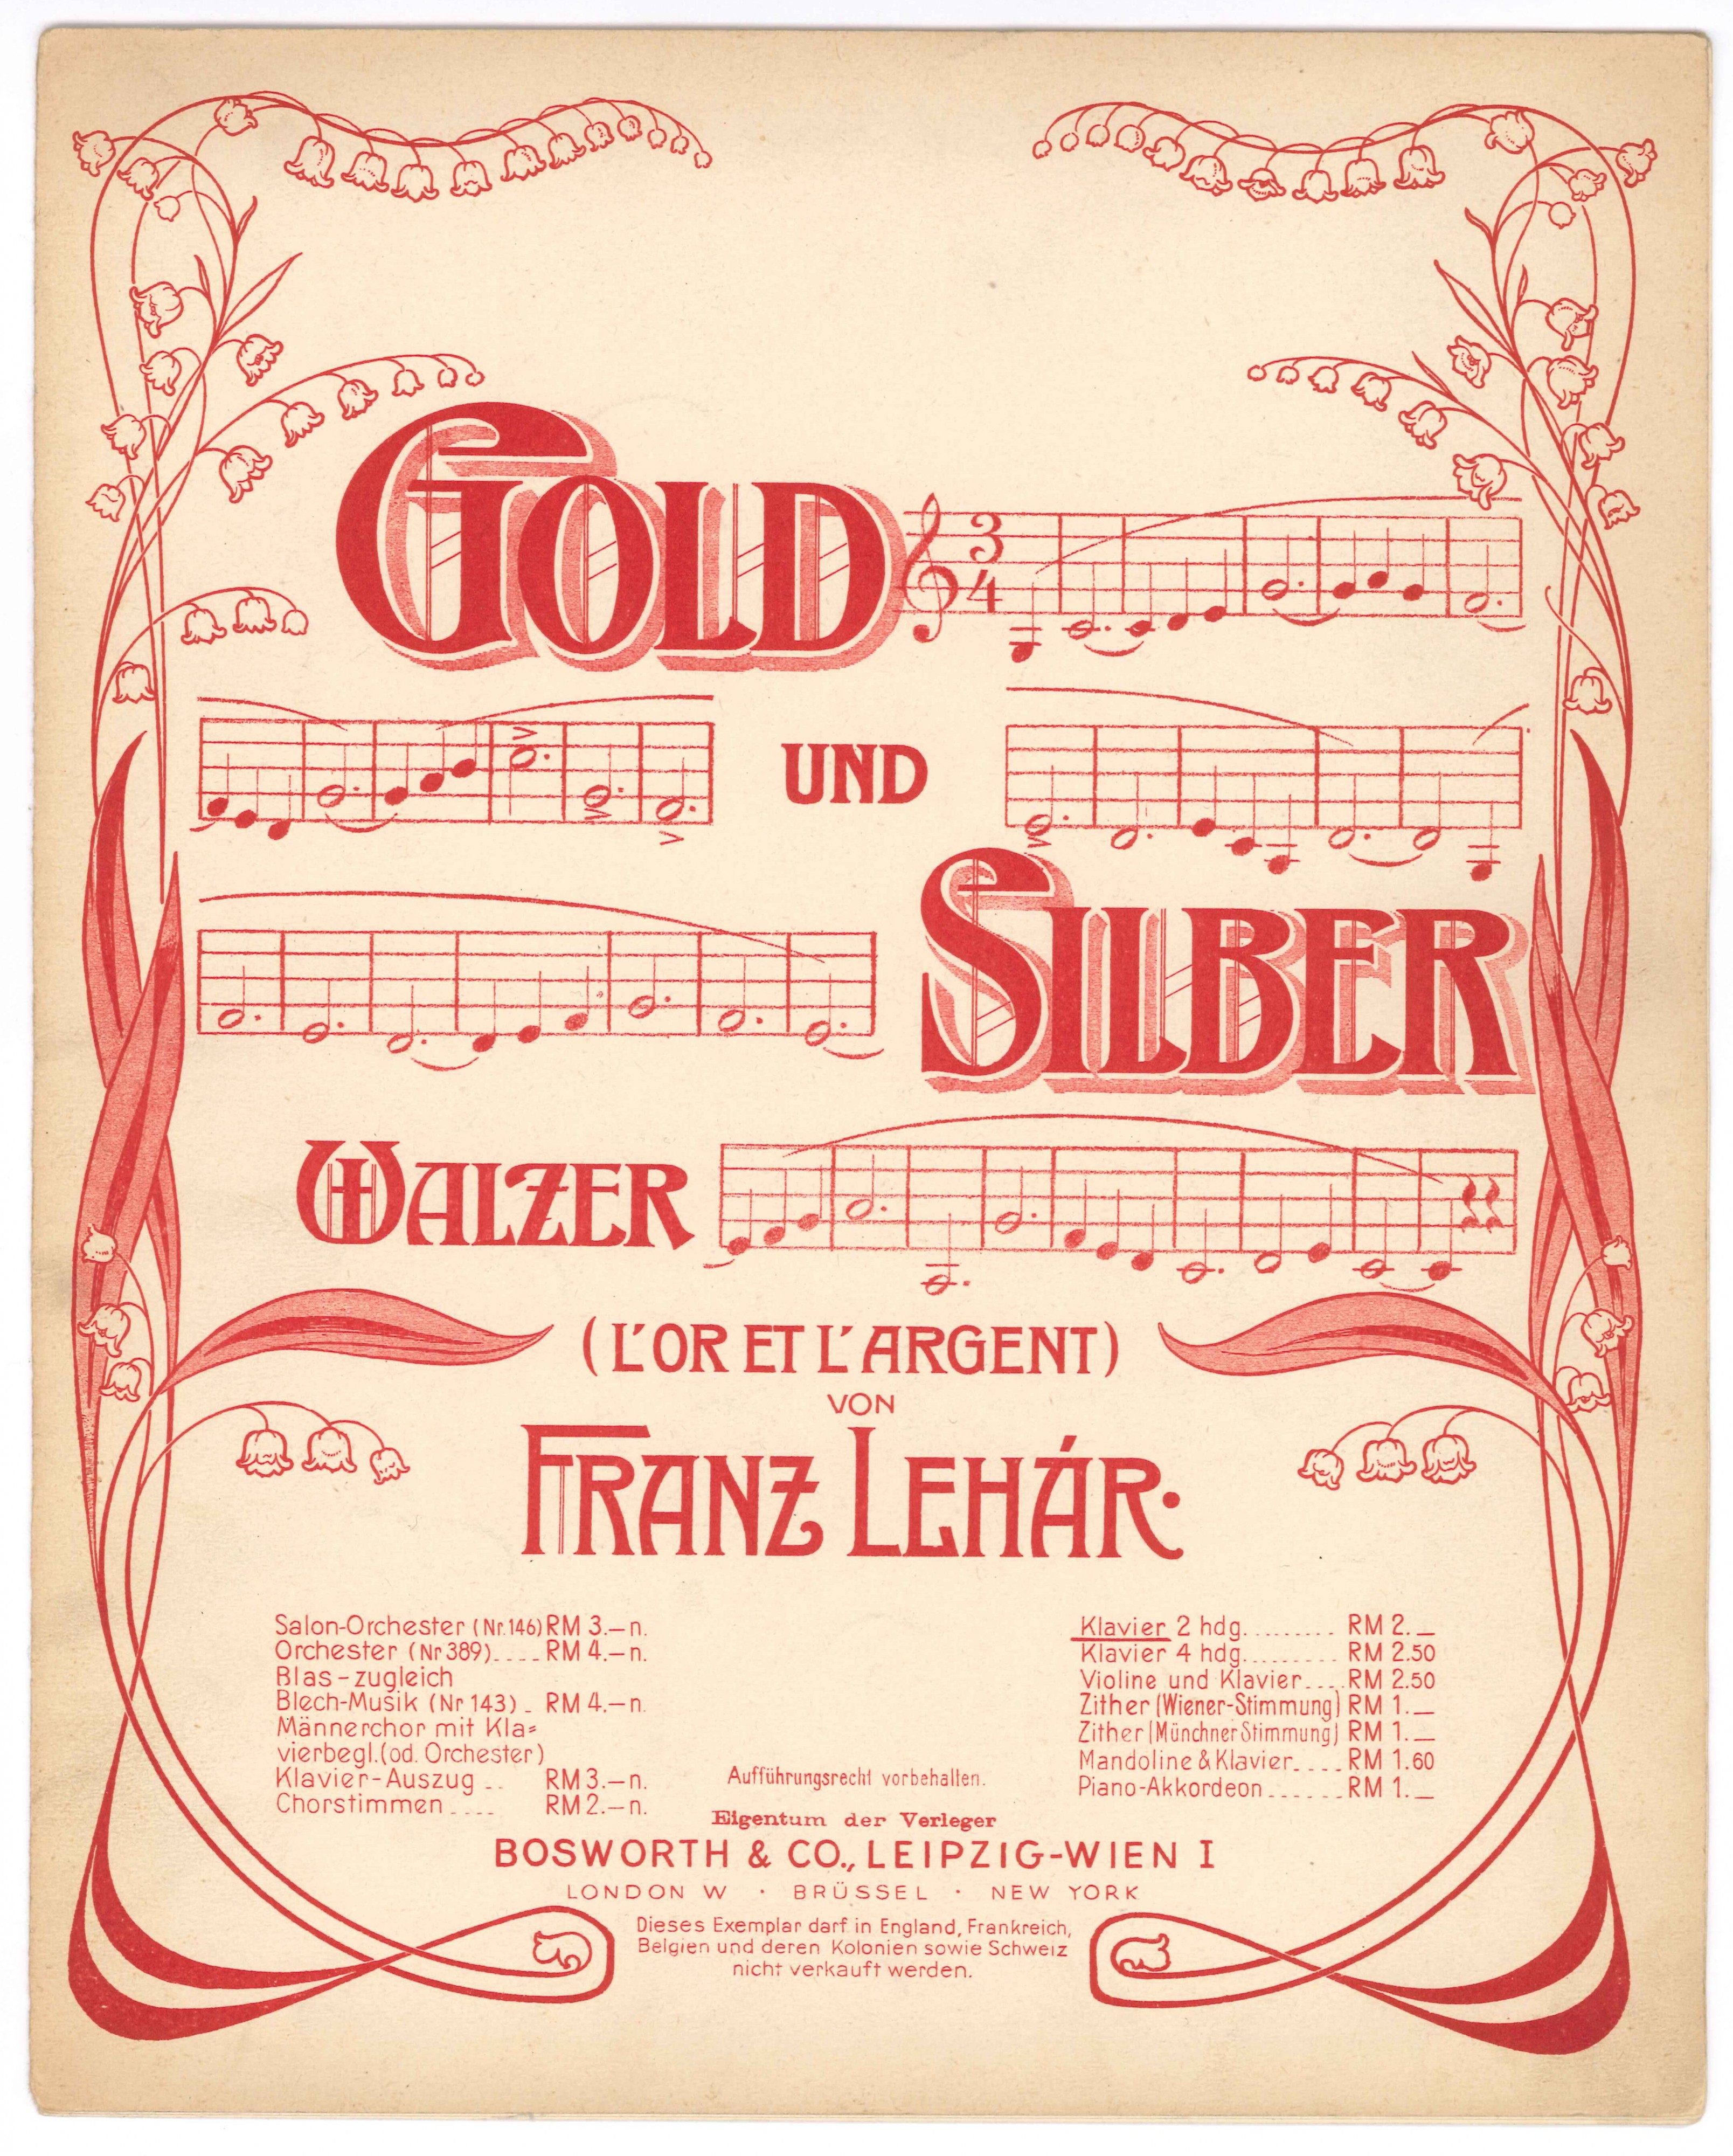 Franz Lehar Gold und Silber Walzer op 79